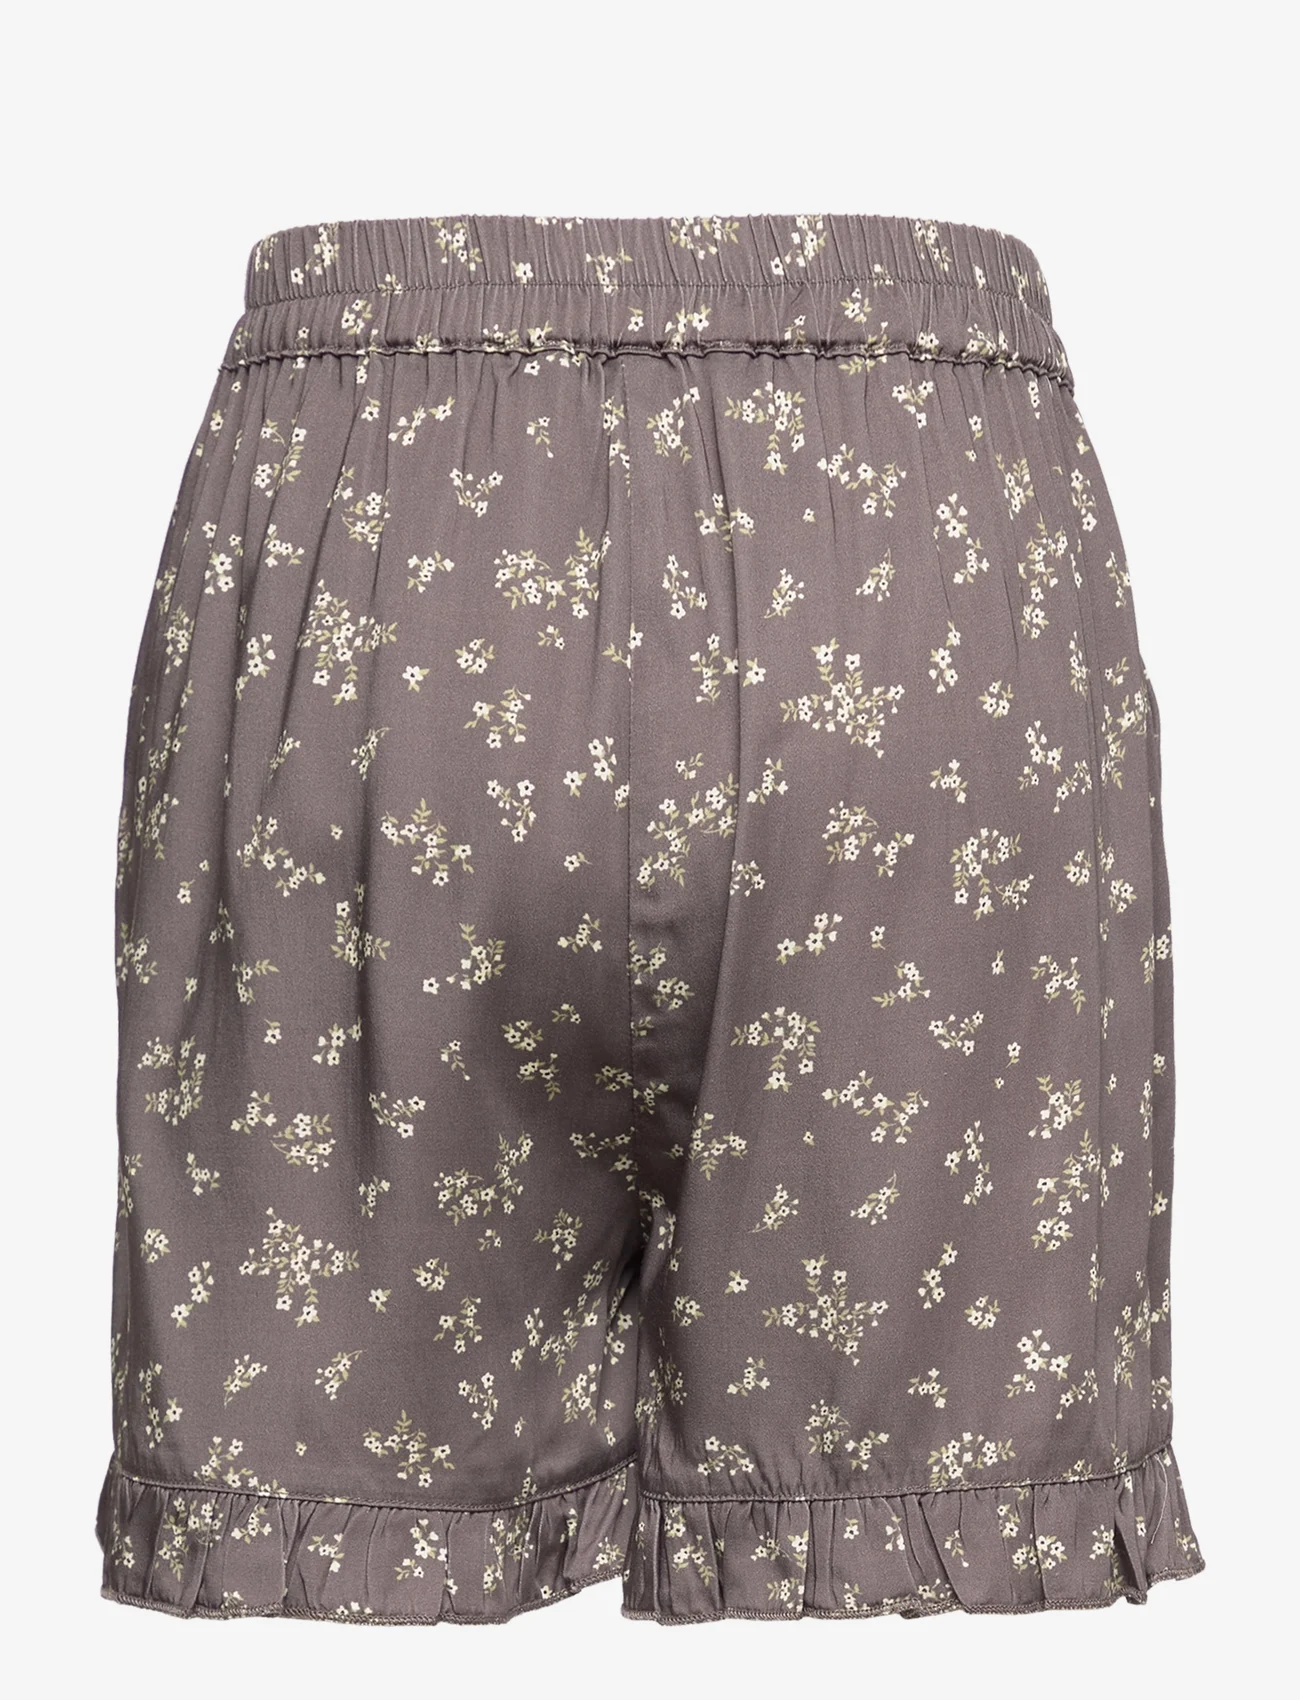 Rosemunde Kids - Shorts - chino shorts - grey summer flower print - 1